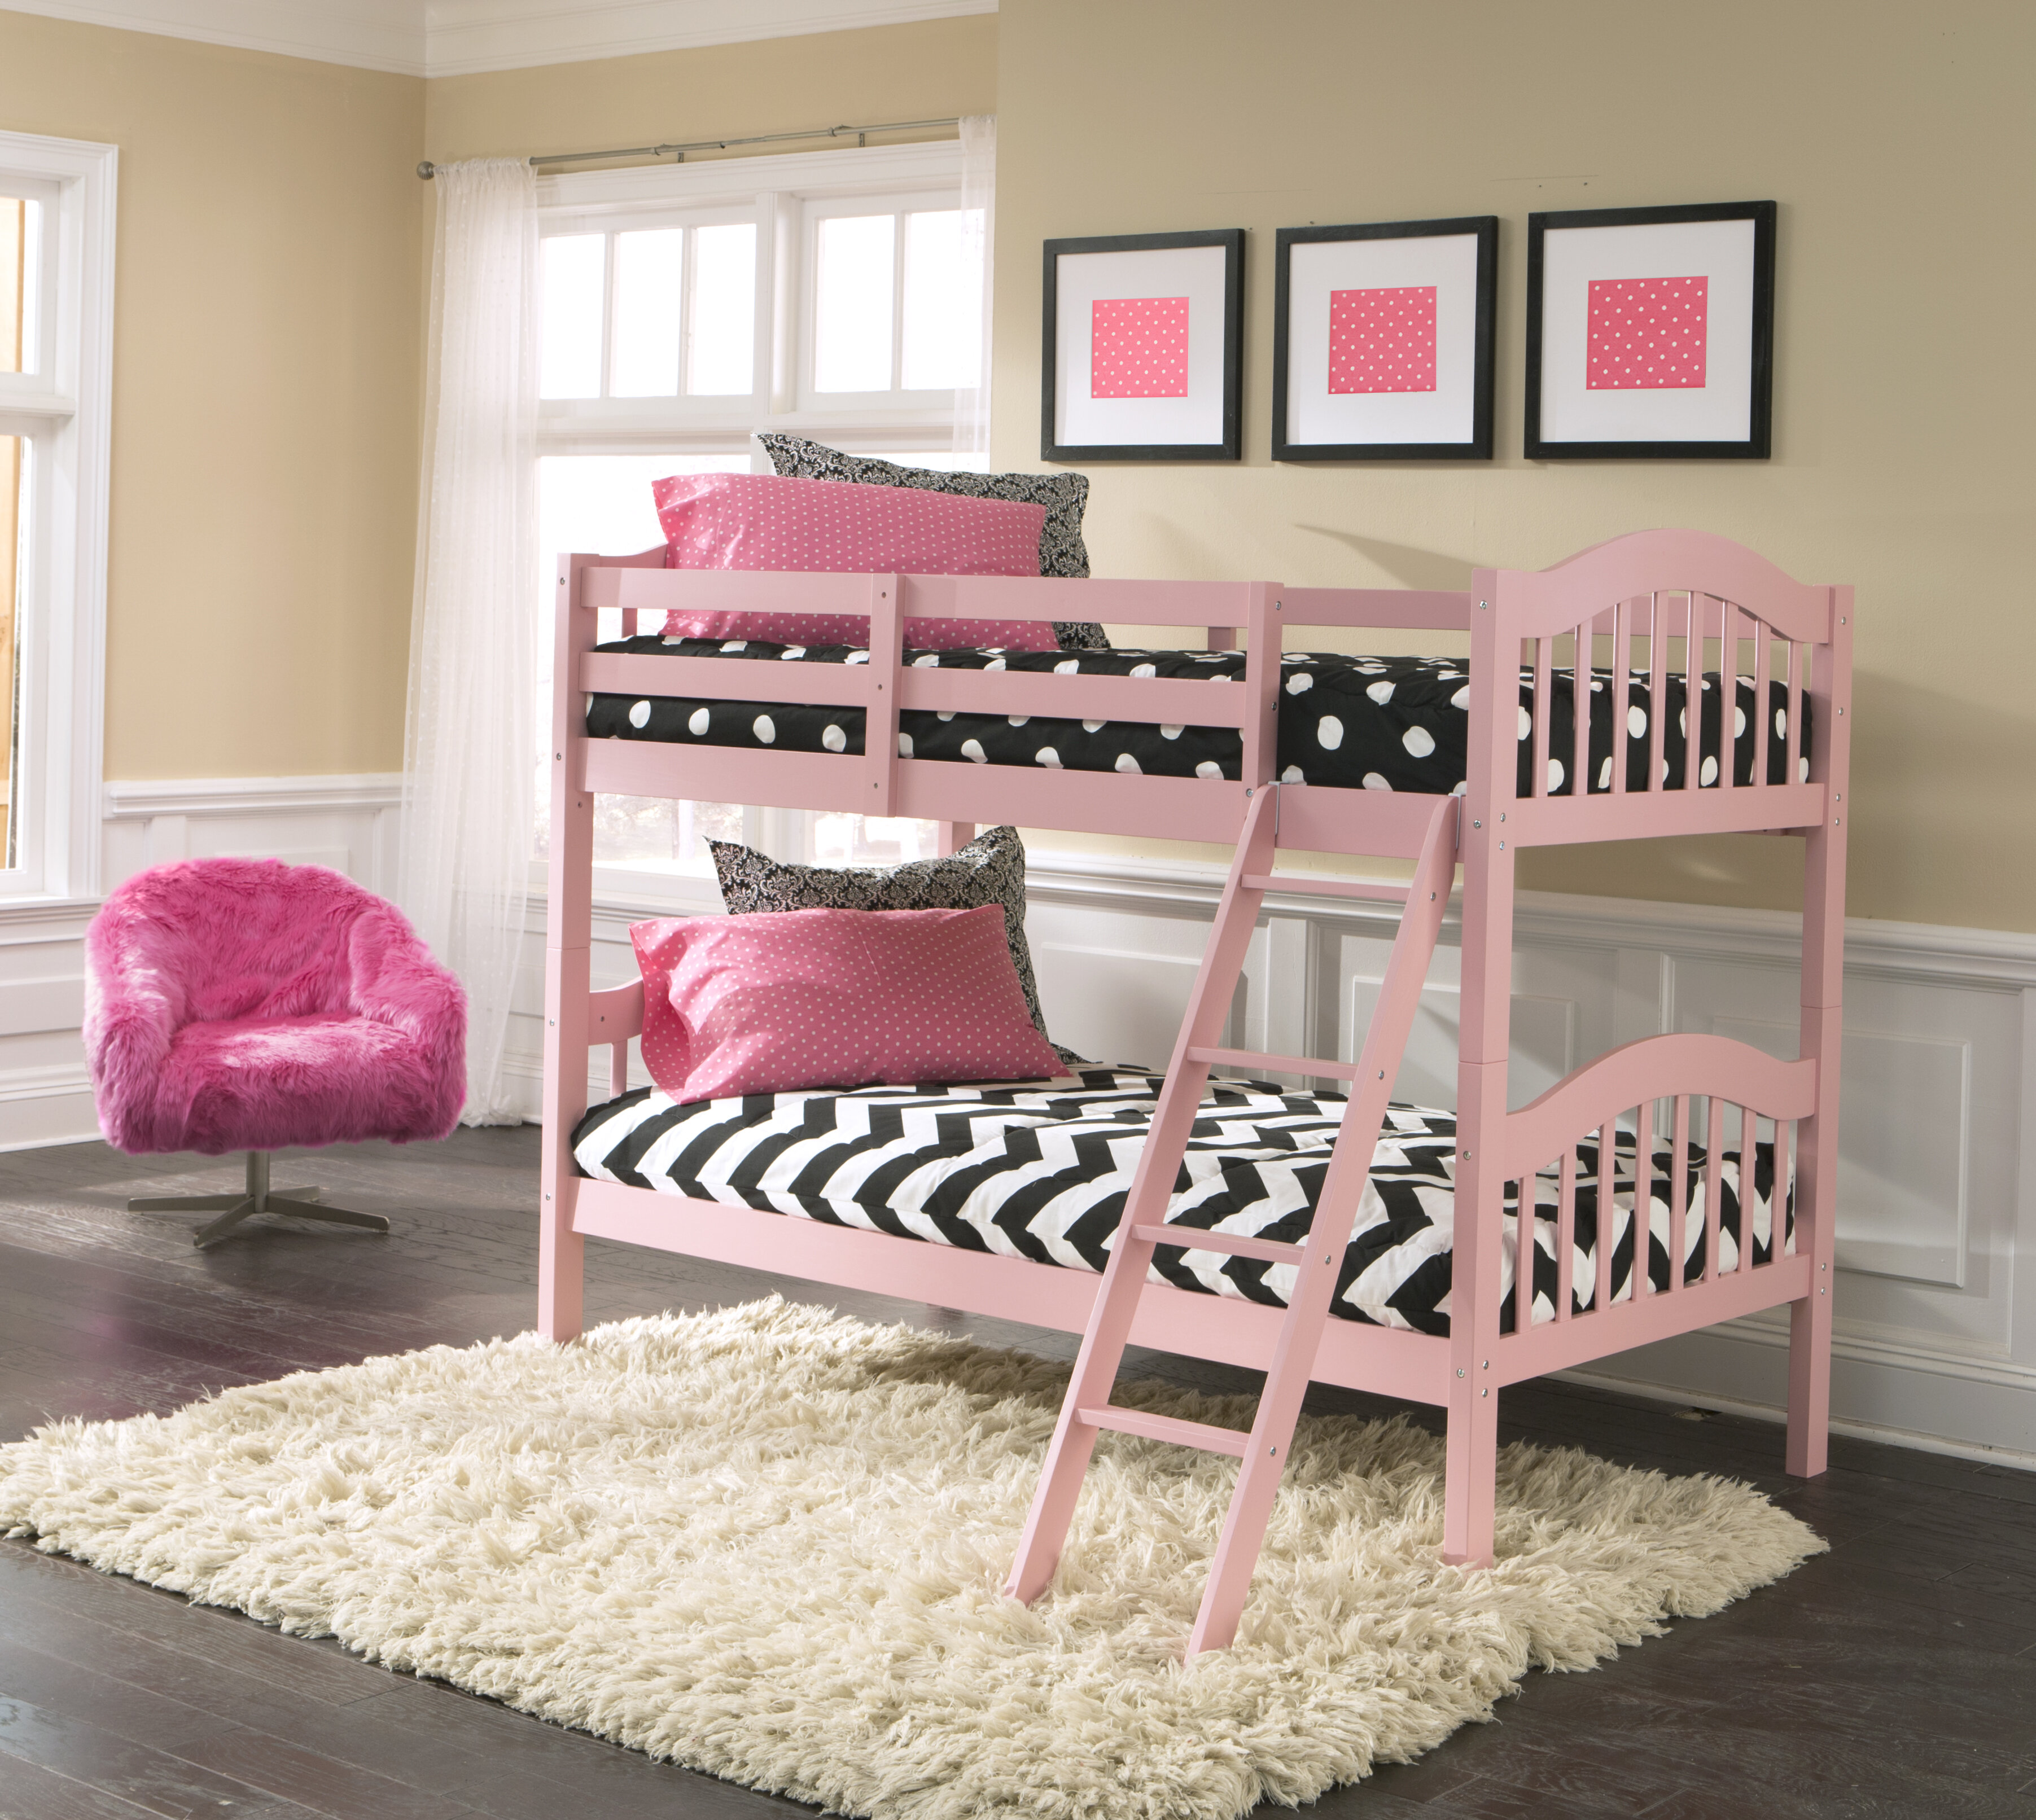 girls pink bunk beds